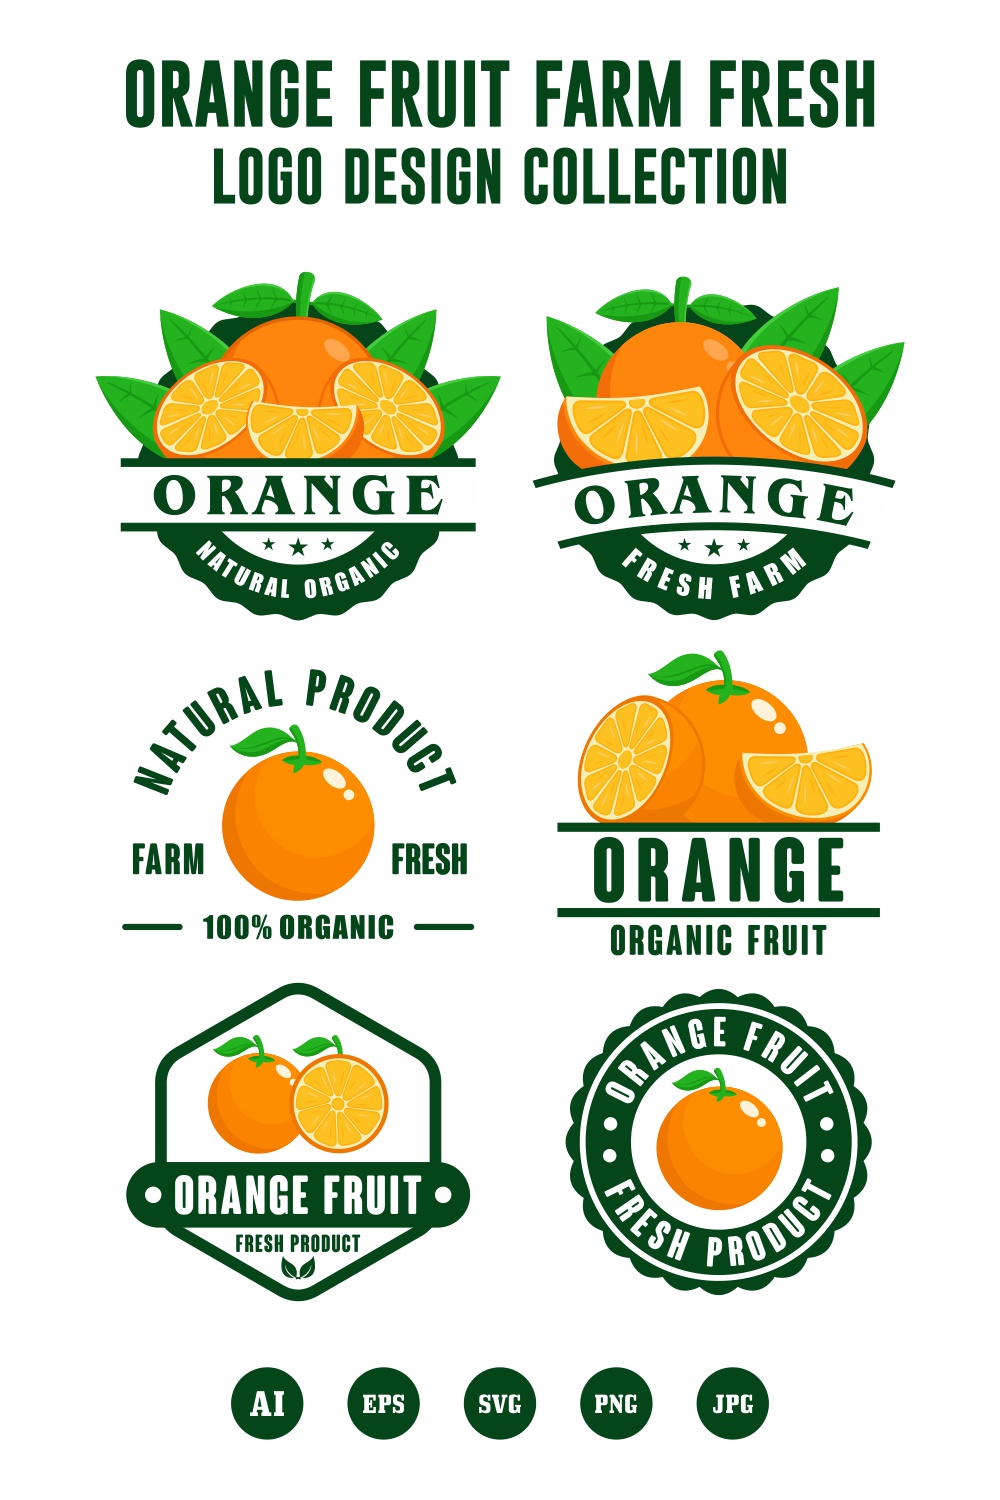 Set Orange fruit fram fresh logo collection - $6 pinterest preview image.